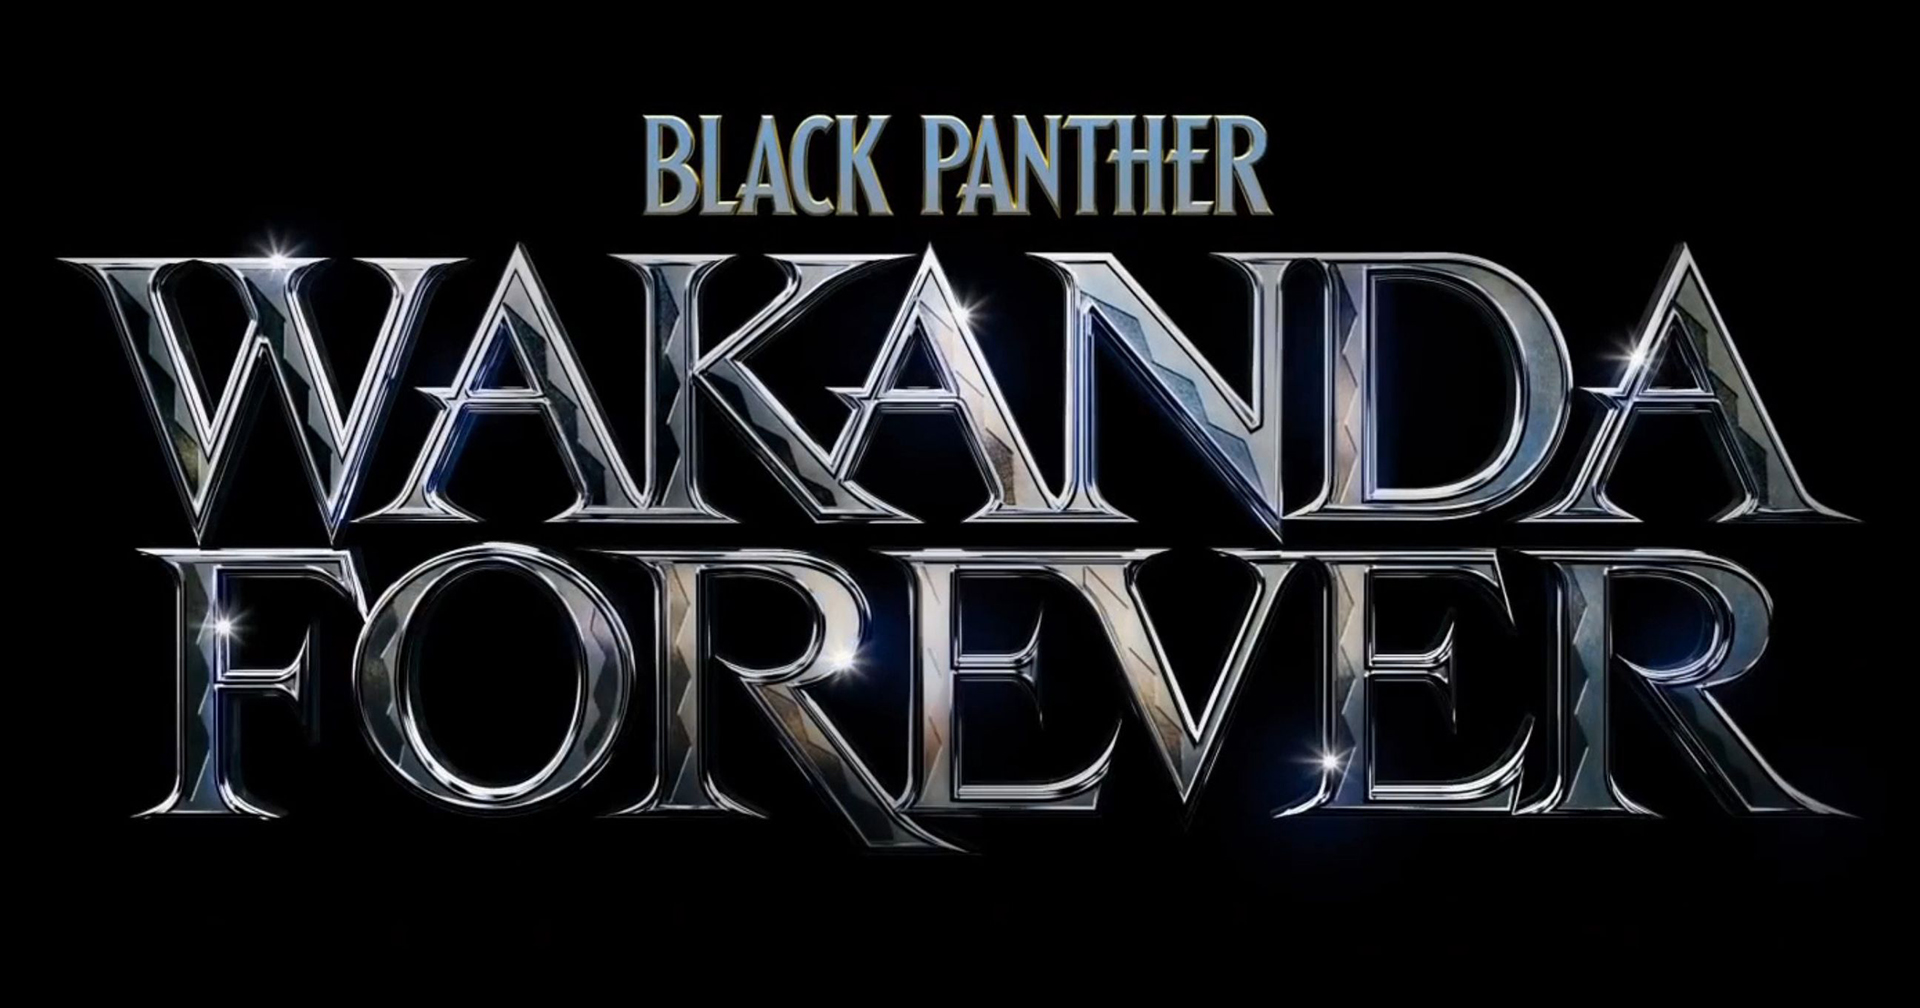 ‘Black Panther : Wanakda Forever’ ถ่ายทำเสร็จแล้ว